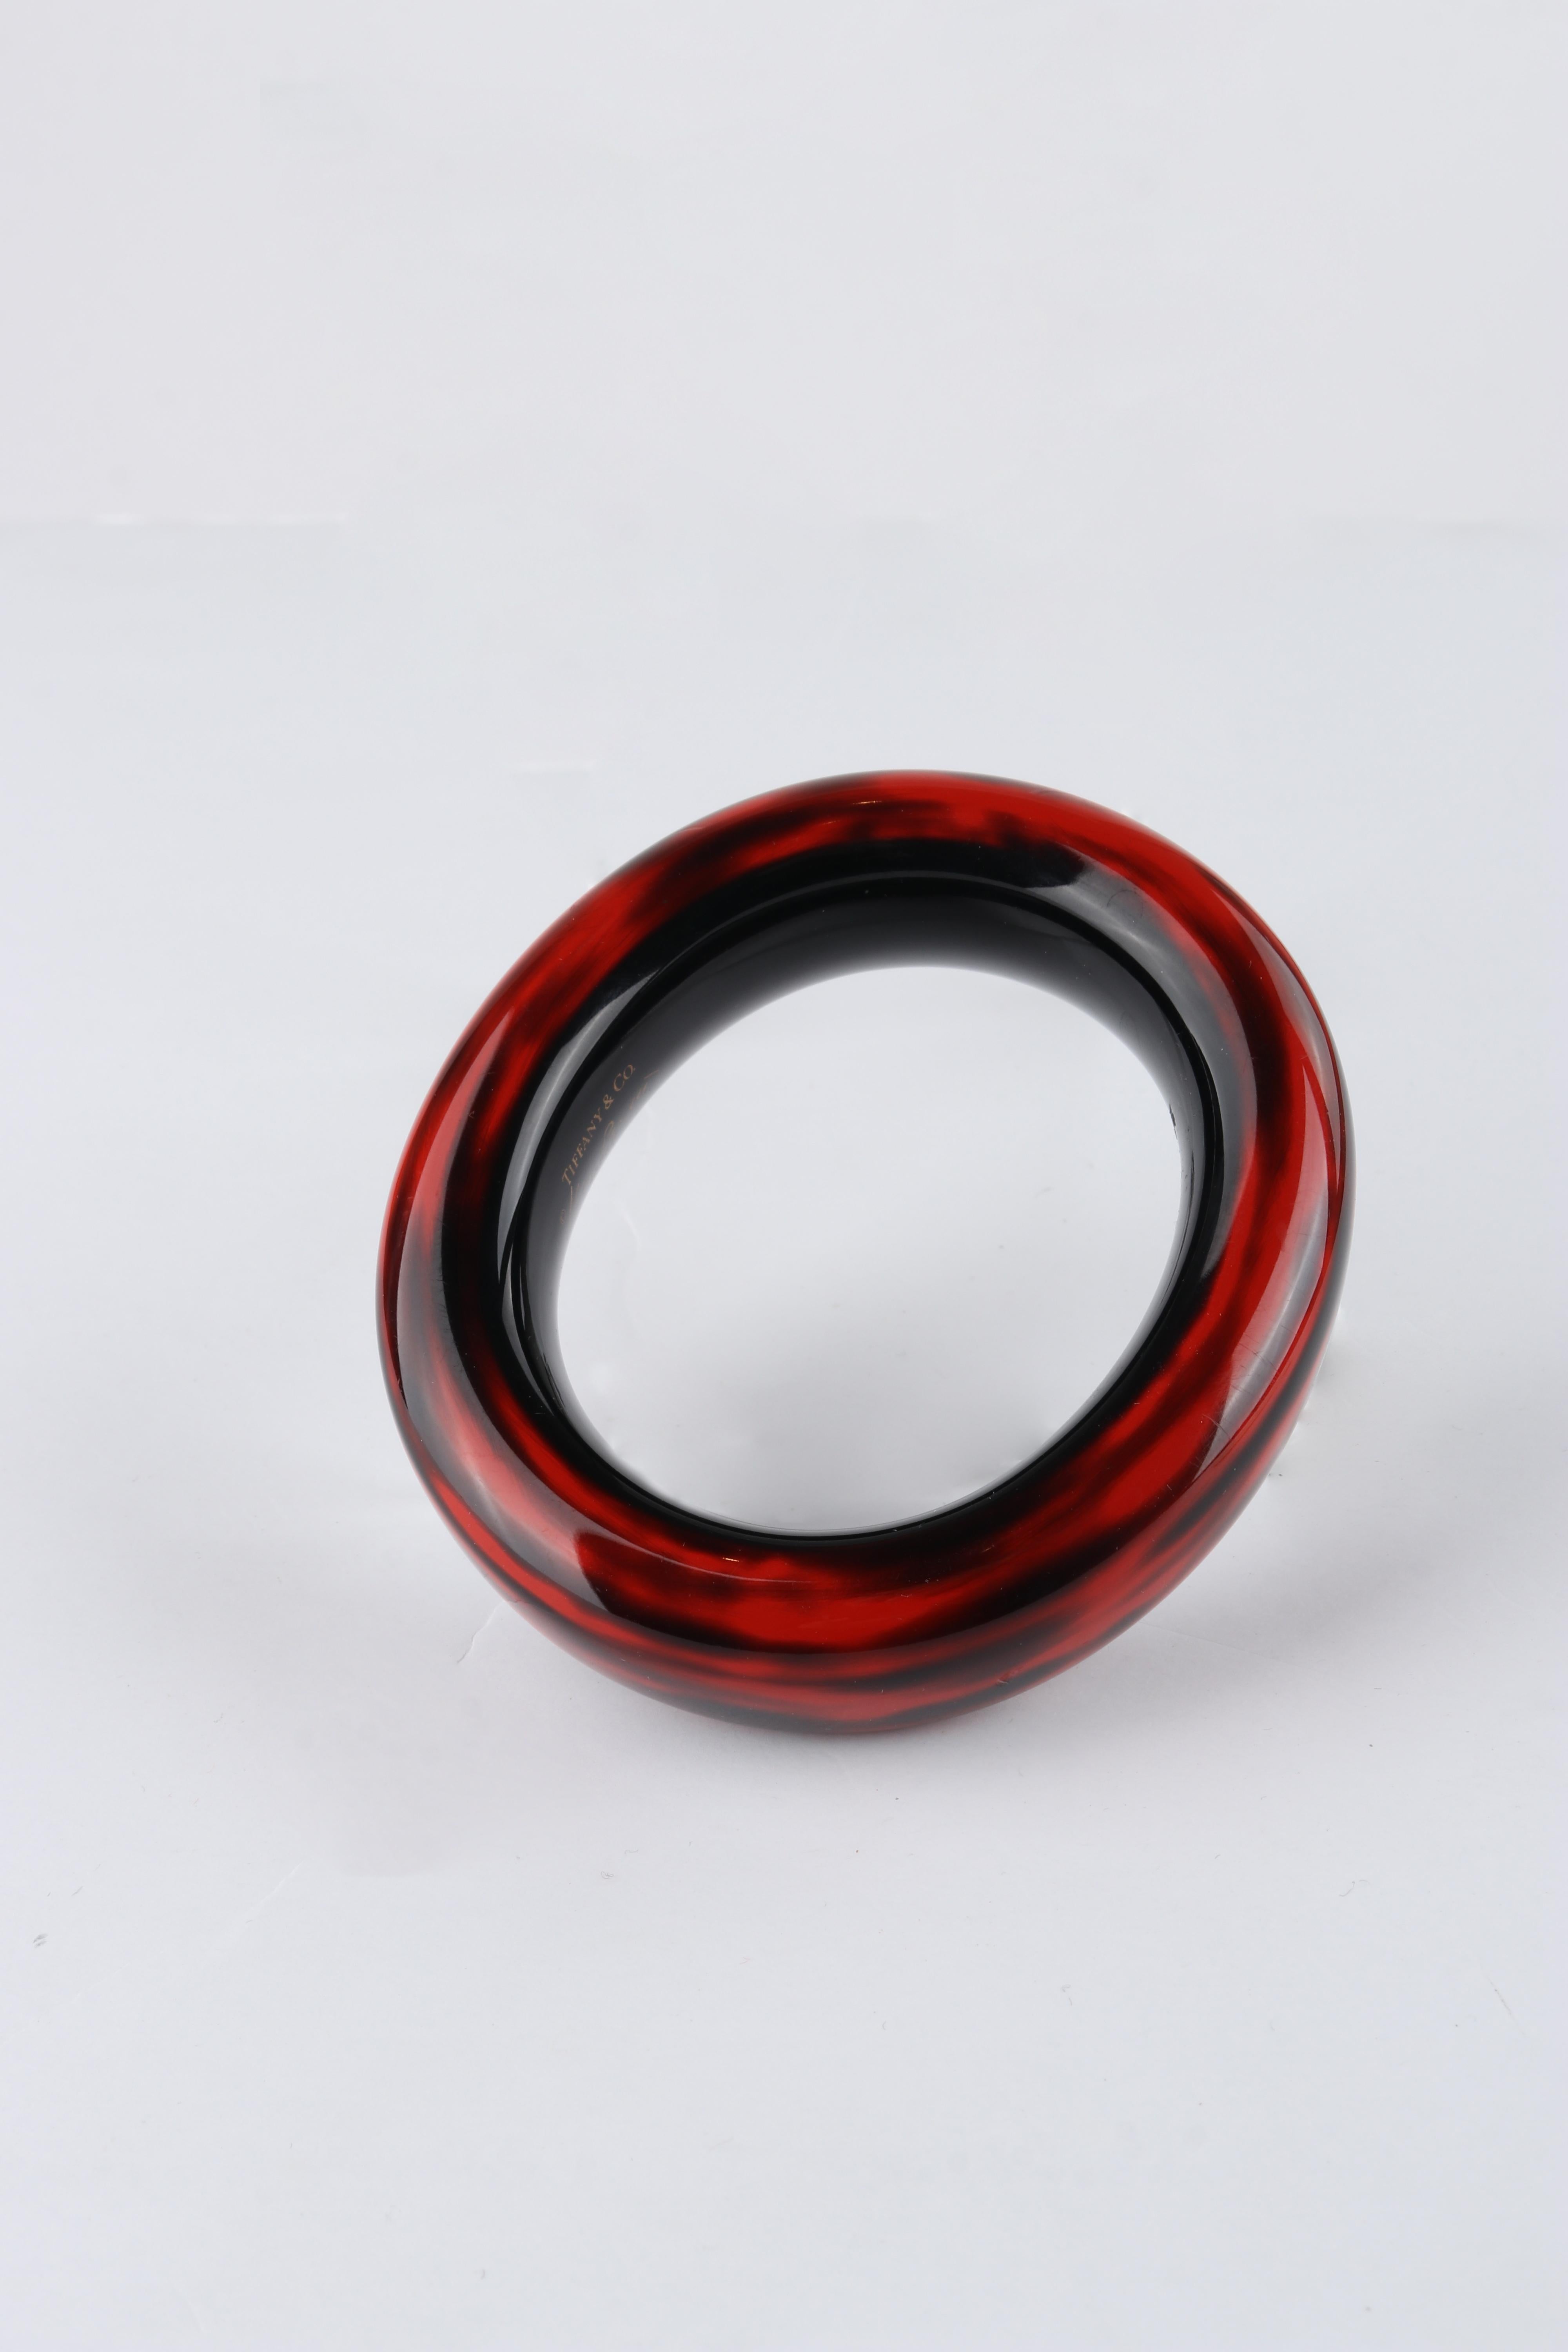 Women's TIFFANY & CO. ELSA PERETTI Black Red Polished Lacquer Hard Wood Bangle Bracelet For Sale